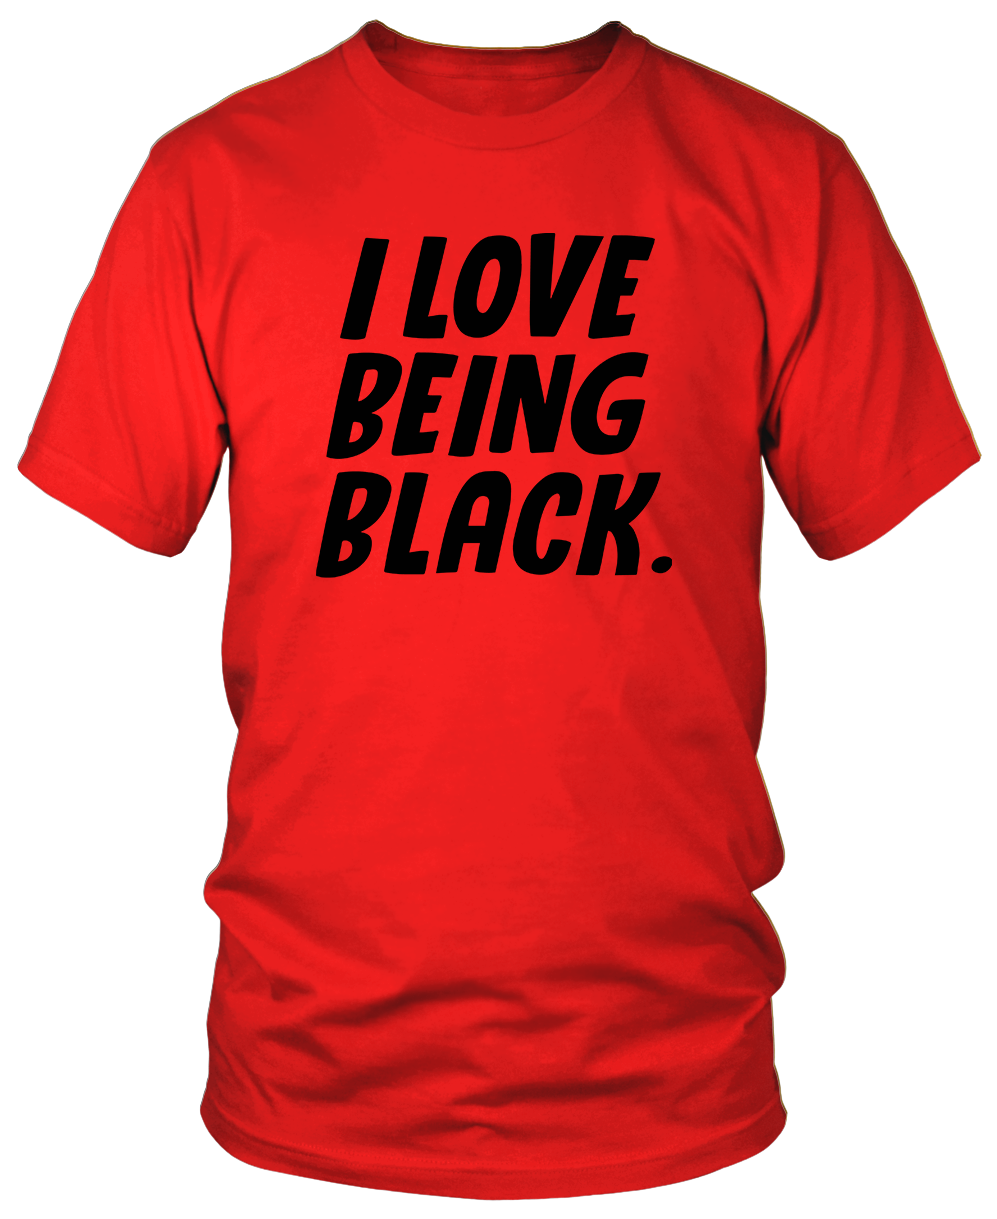 I LOVE BEING BLACK T-Shirts